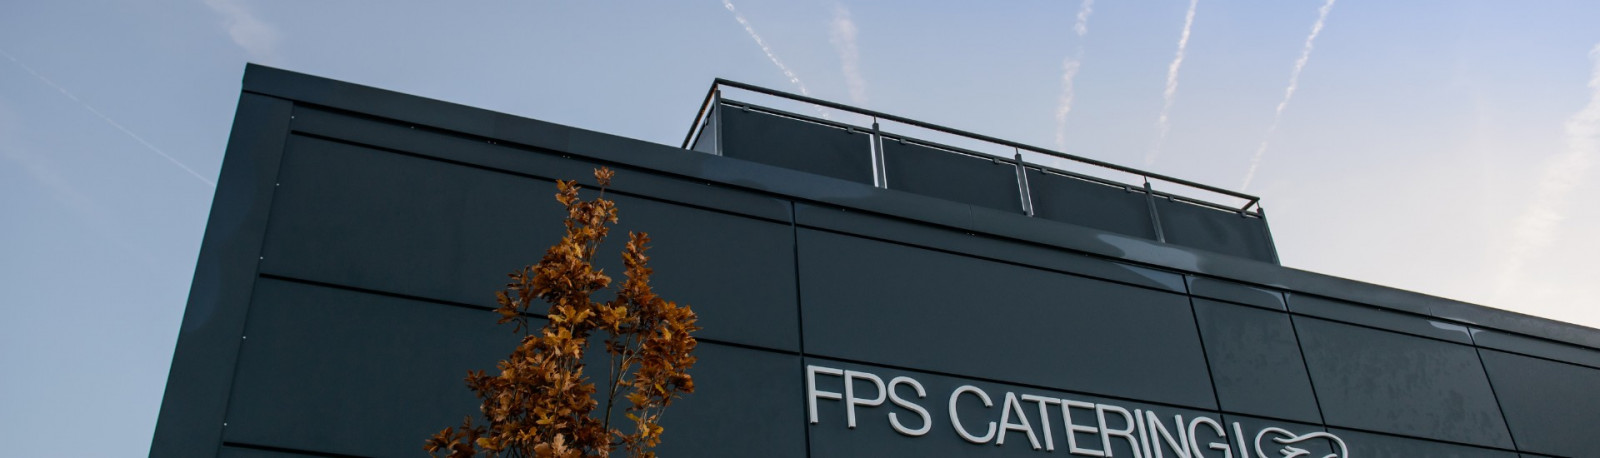 FPS Catering Jobportal Verwaltung Header